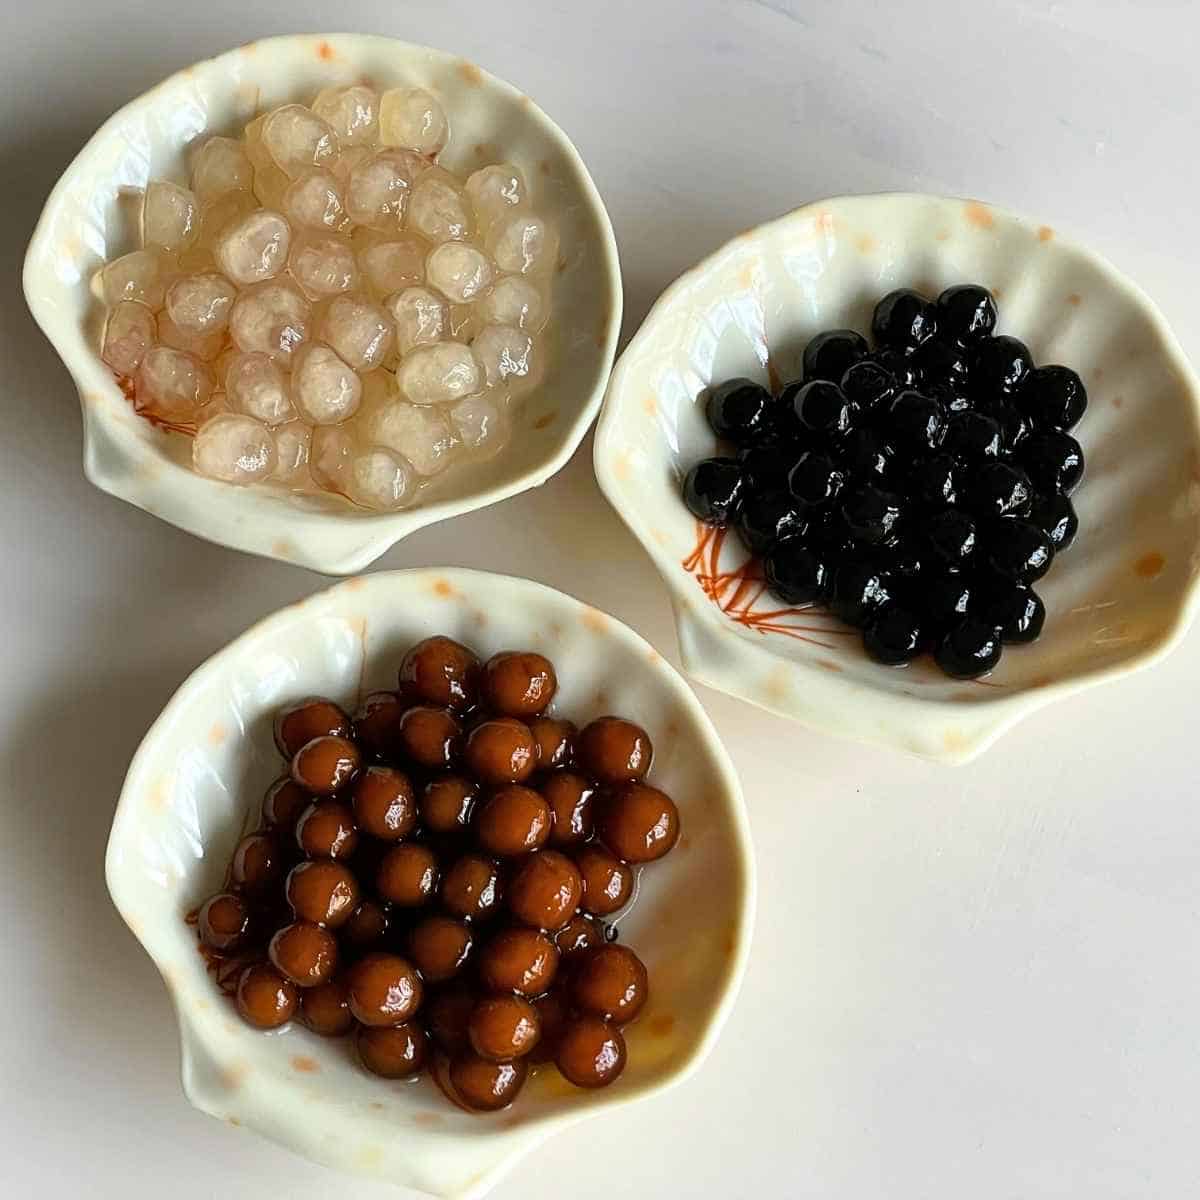 Instant black sugar pearls vs homemade